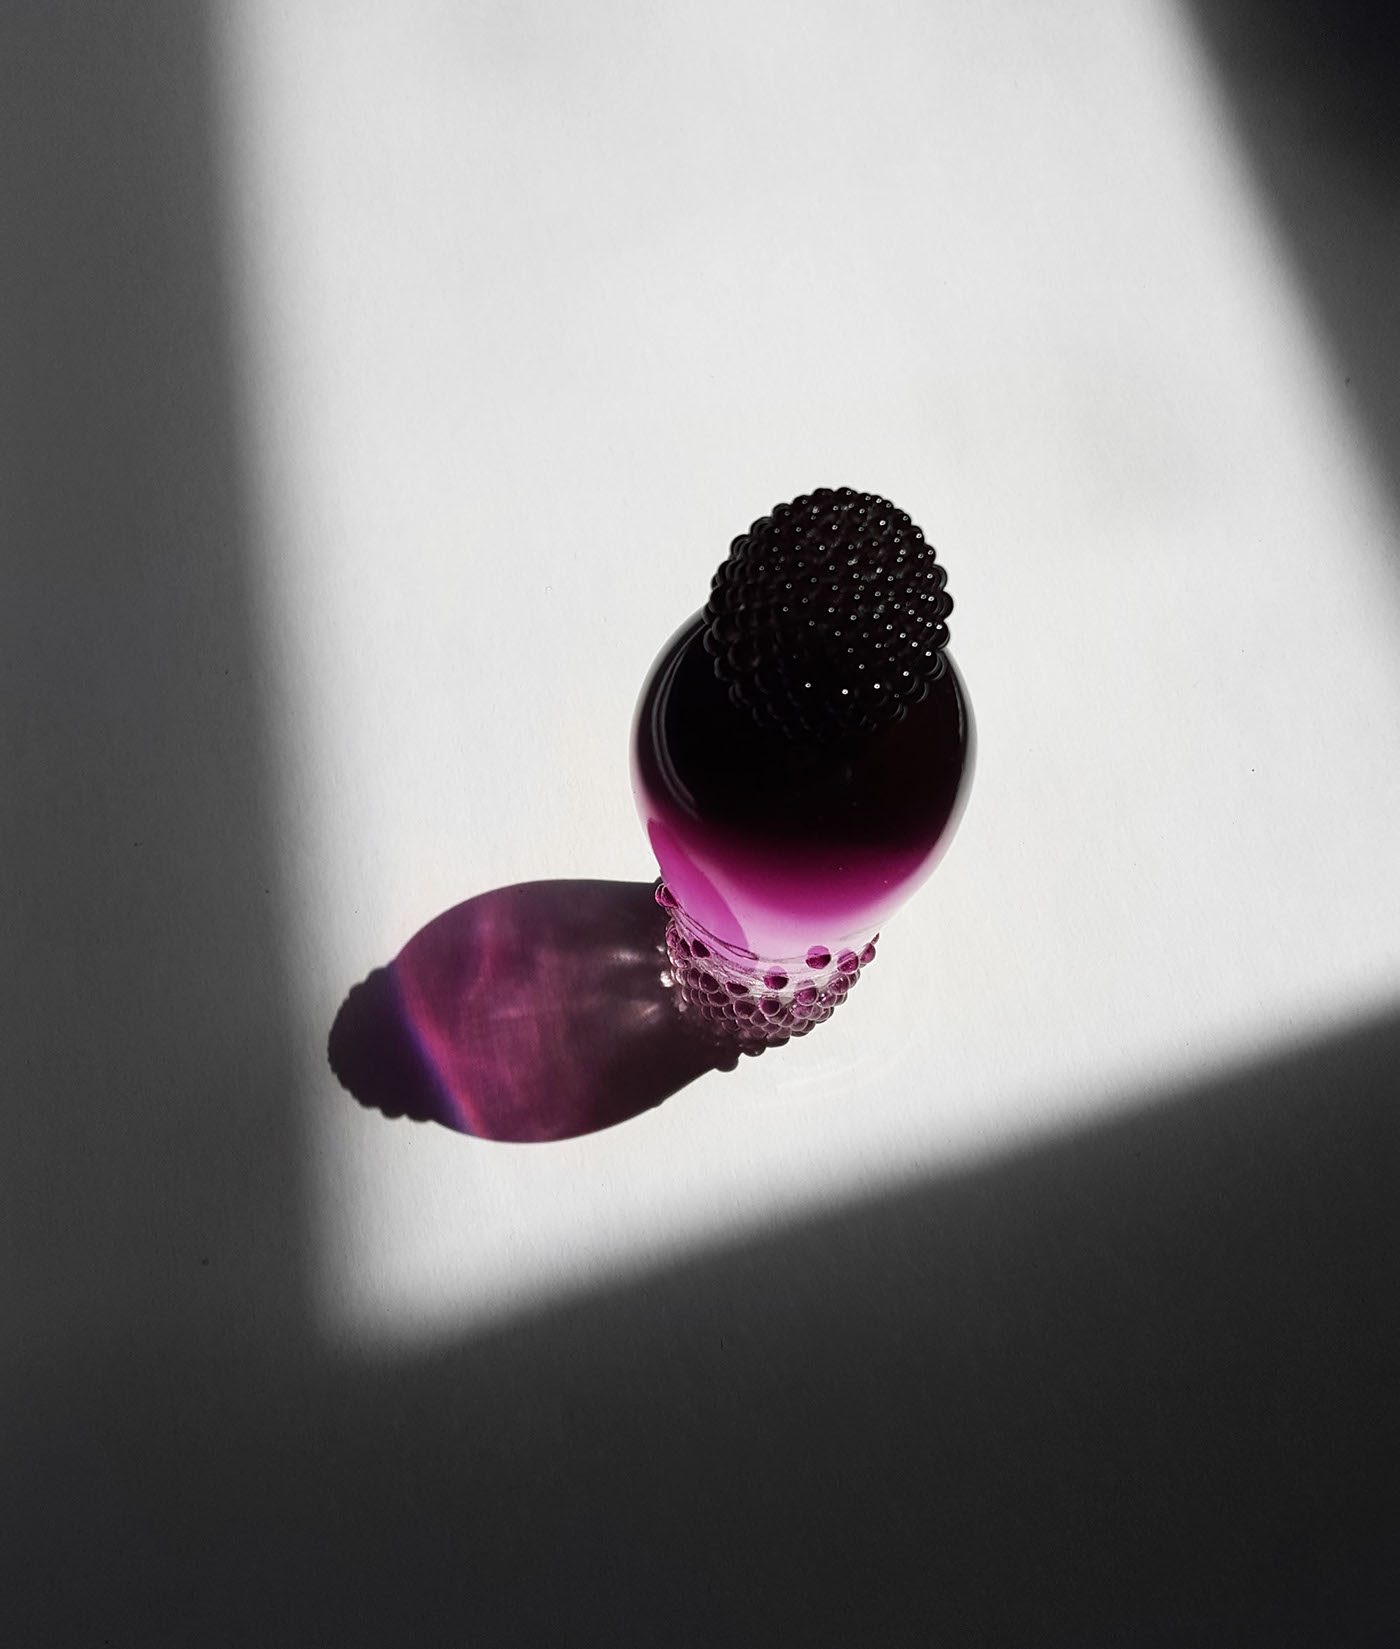 perfume Fragrance bottle glass blackberry sweet Fruit Moody shadow demure